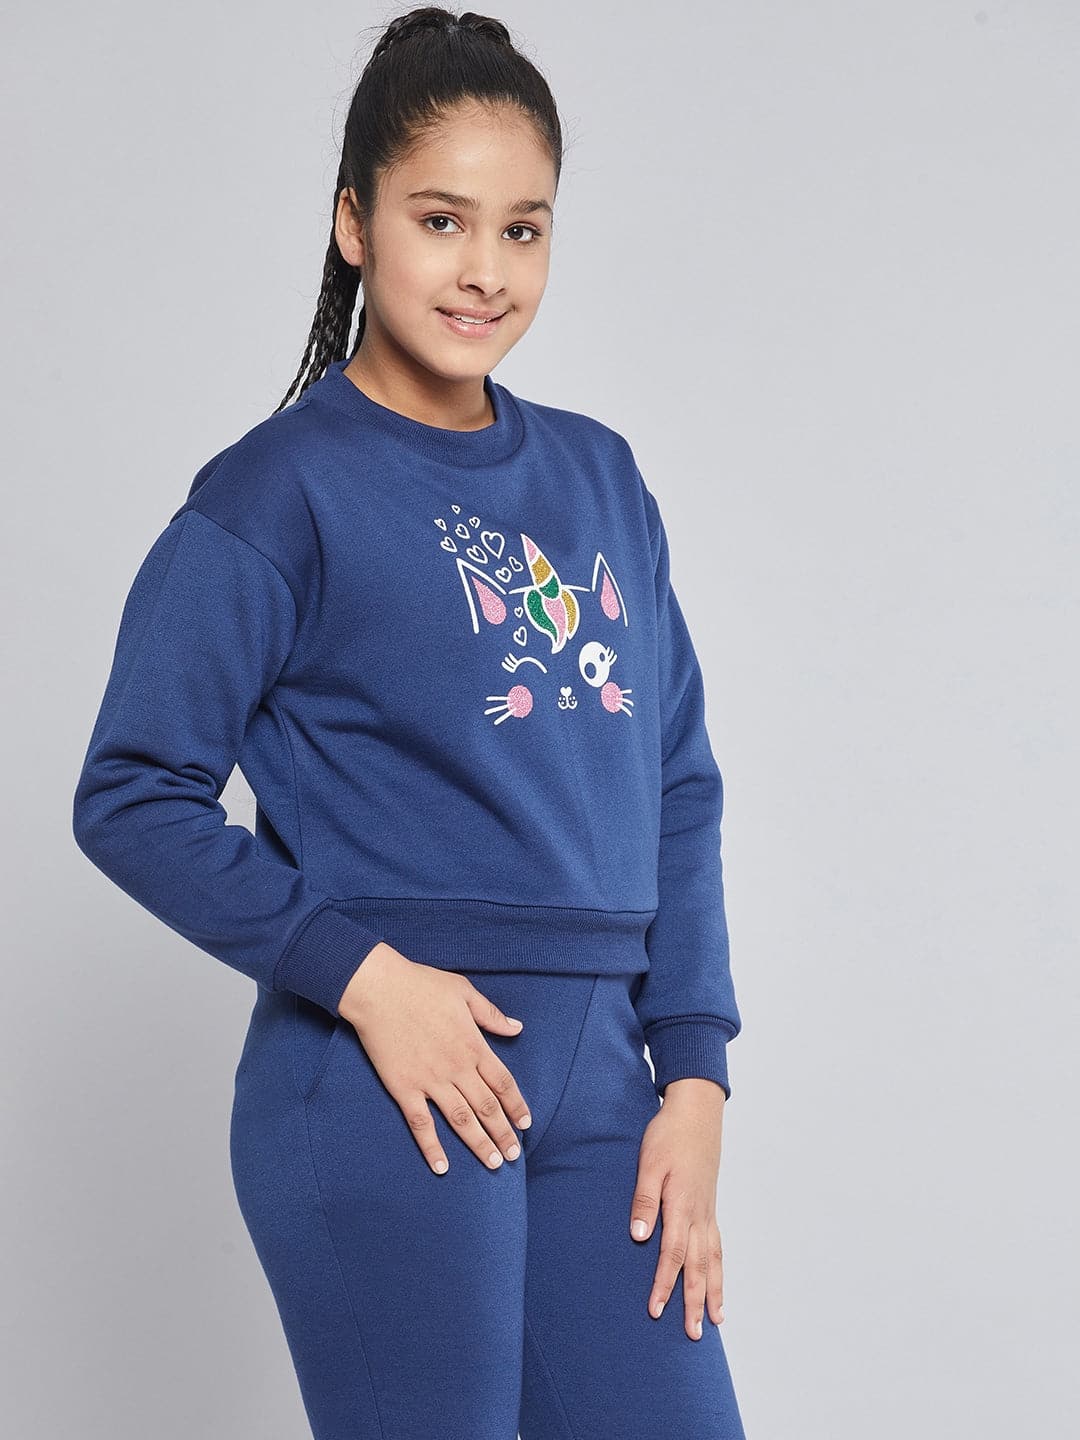 Girls Blue Fleece Glitter Print Sweatshirt - Lyush Kids